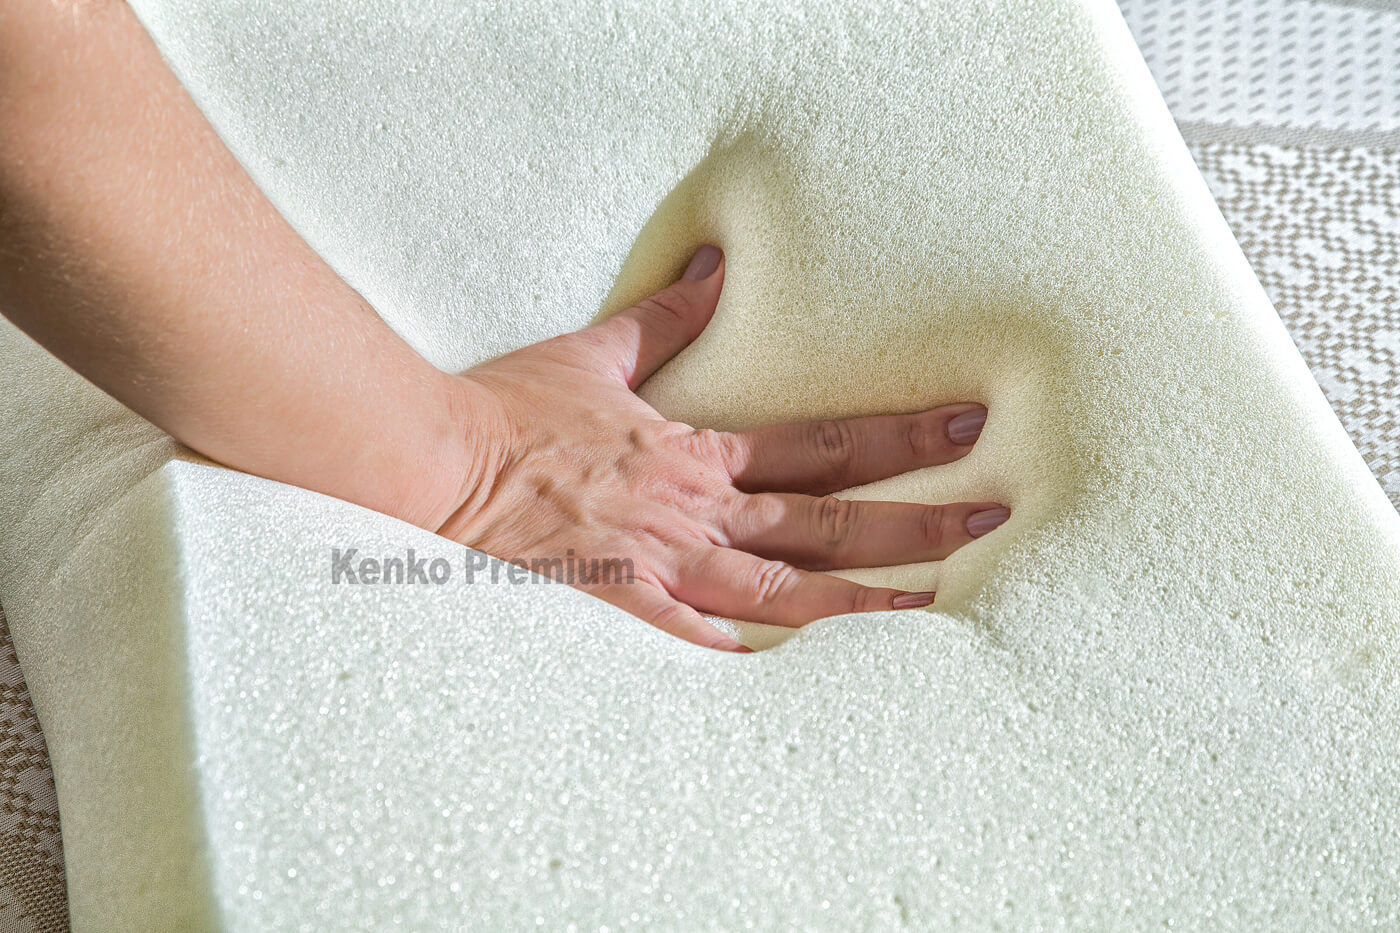 Travesseiro Magnético Látex HR 13cm Altura Kenko Premium - Kenko Premium Colchões